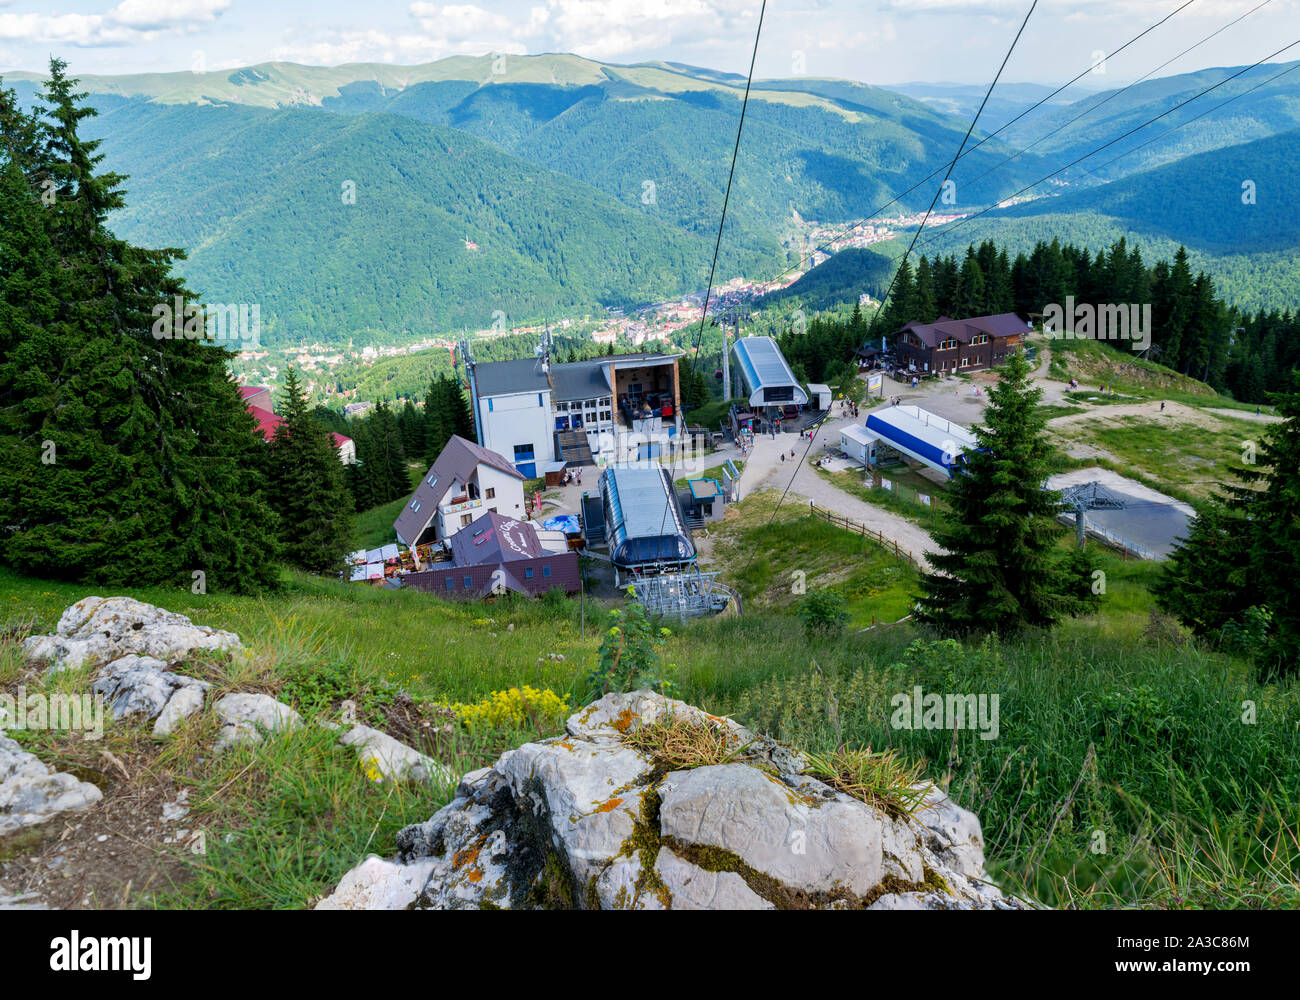 Sinaia, Prahova, Romania - June 29, 2019: View of the cable car gondola base station in Sinaia at 1400m altitude Stock Photo